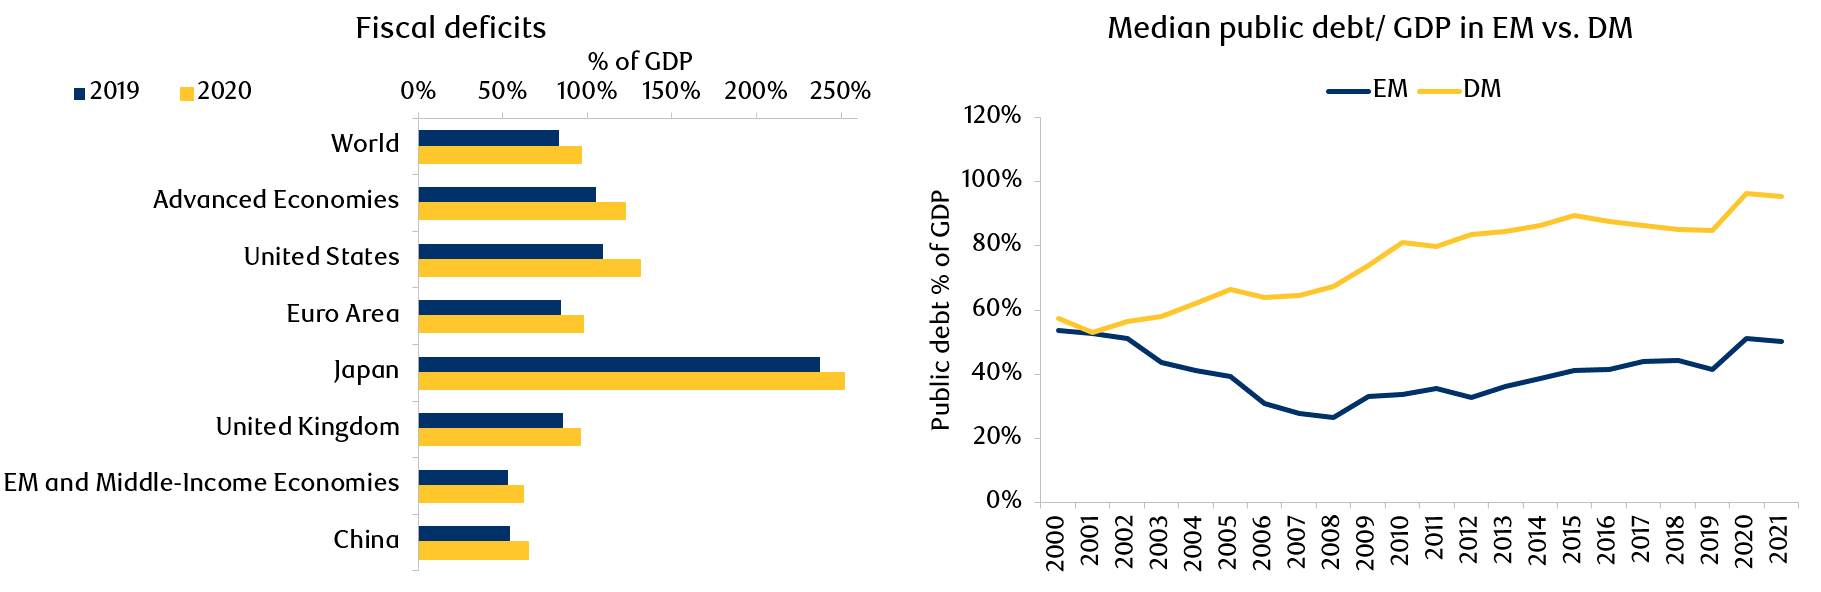 Exhibit 4: Fiscal deficits & Government Debt / GDP in EM vs. DM